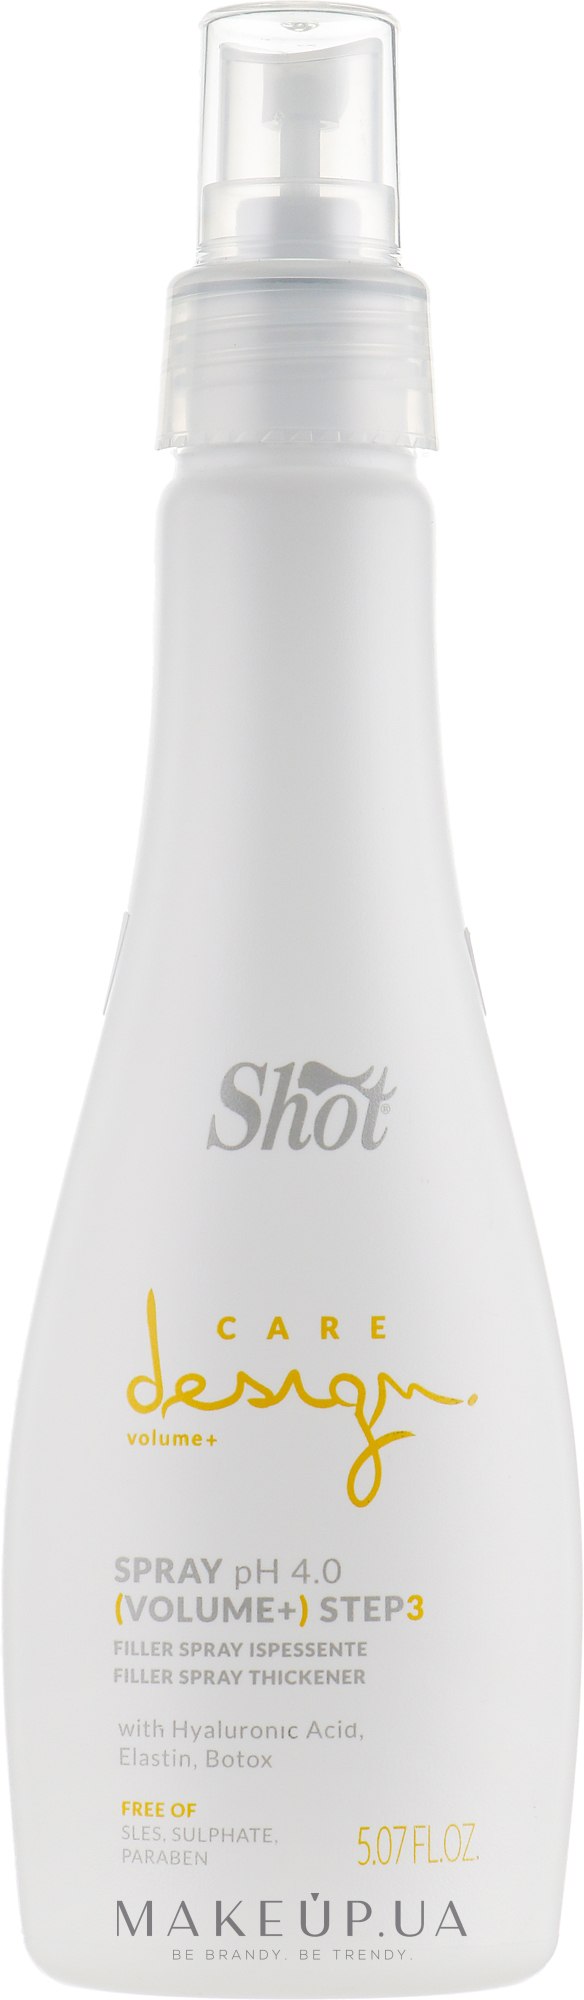 Спрей-филлер увлажняющий для волос - Shot Care Design Volume+ Step 3 Filler Spray Thickener — фото 150ml